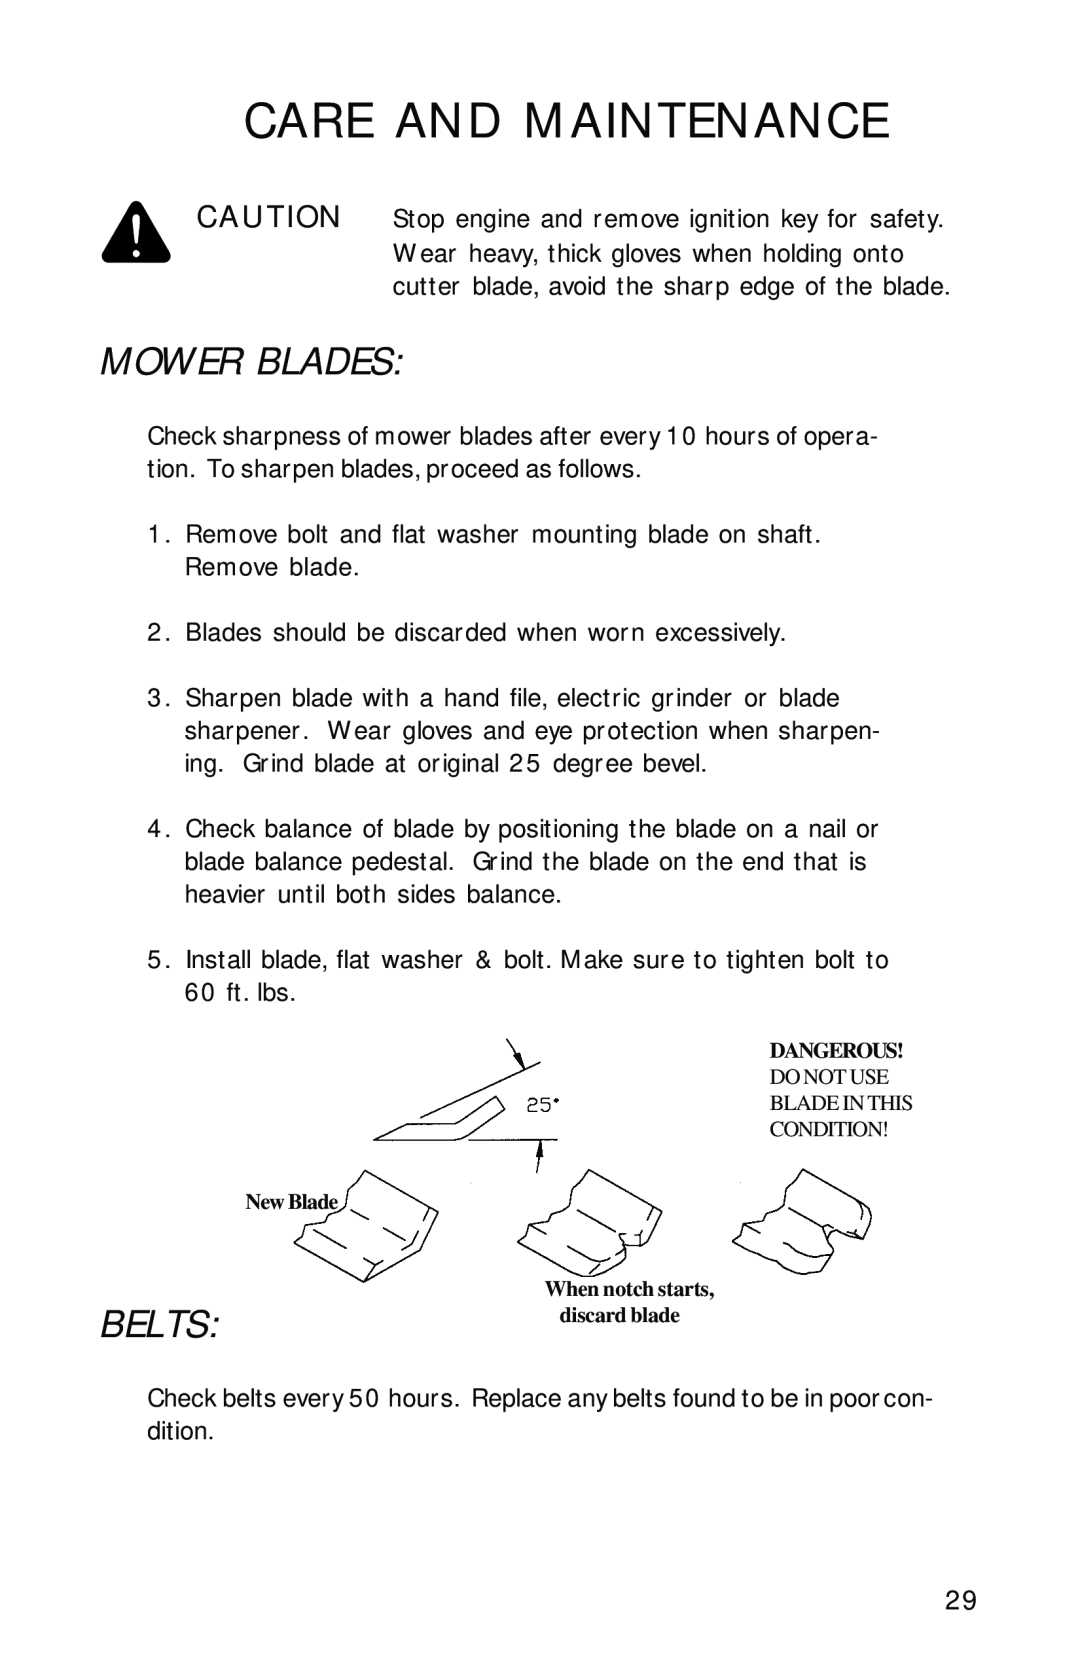 Dixon 2700 manual Mower Blades, Belts, Care And Maintenance, Dangerous, New Blade When notch starts 